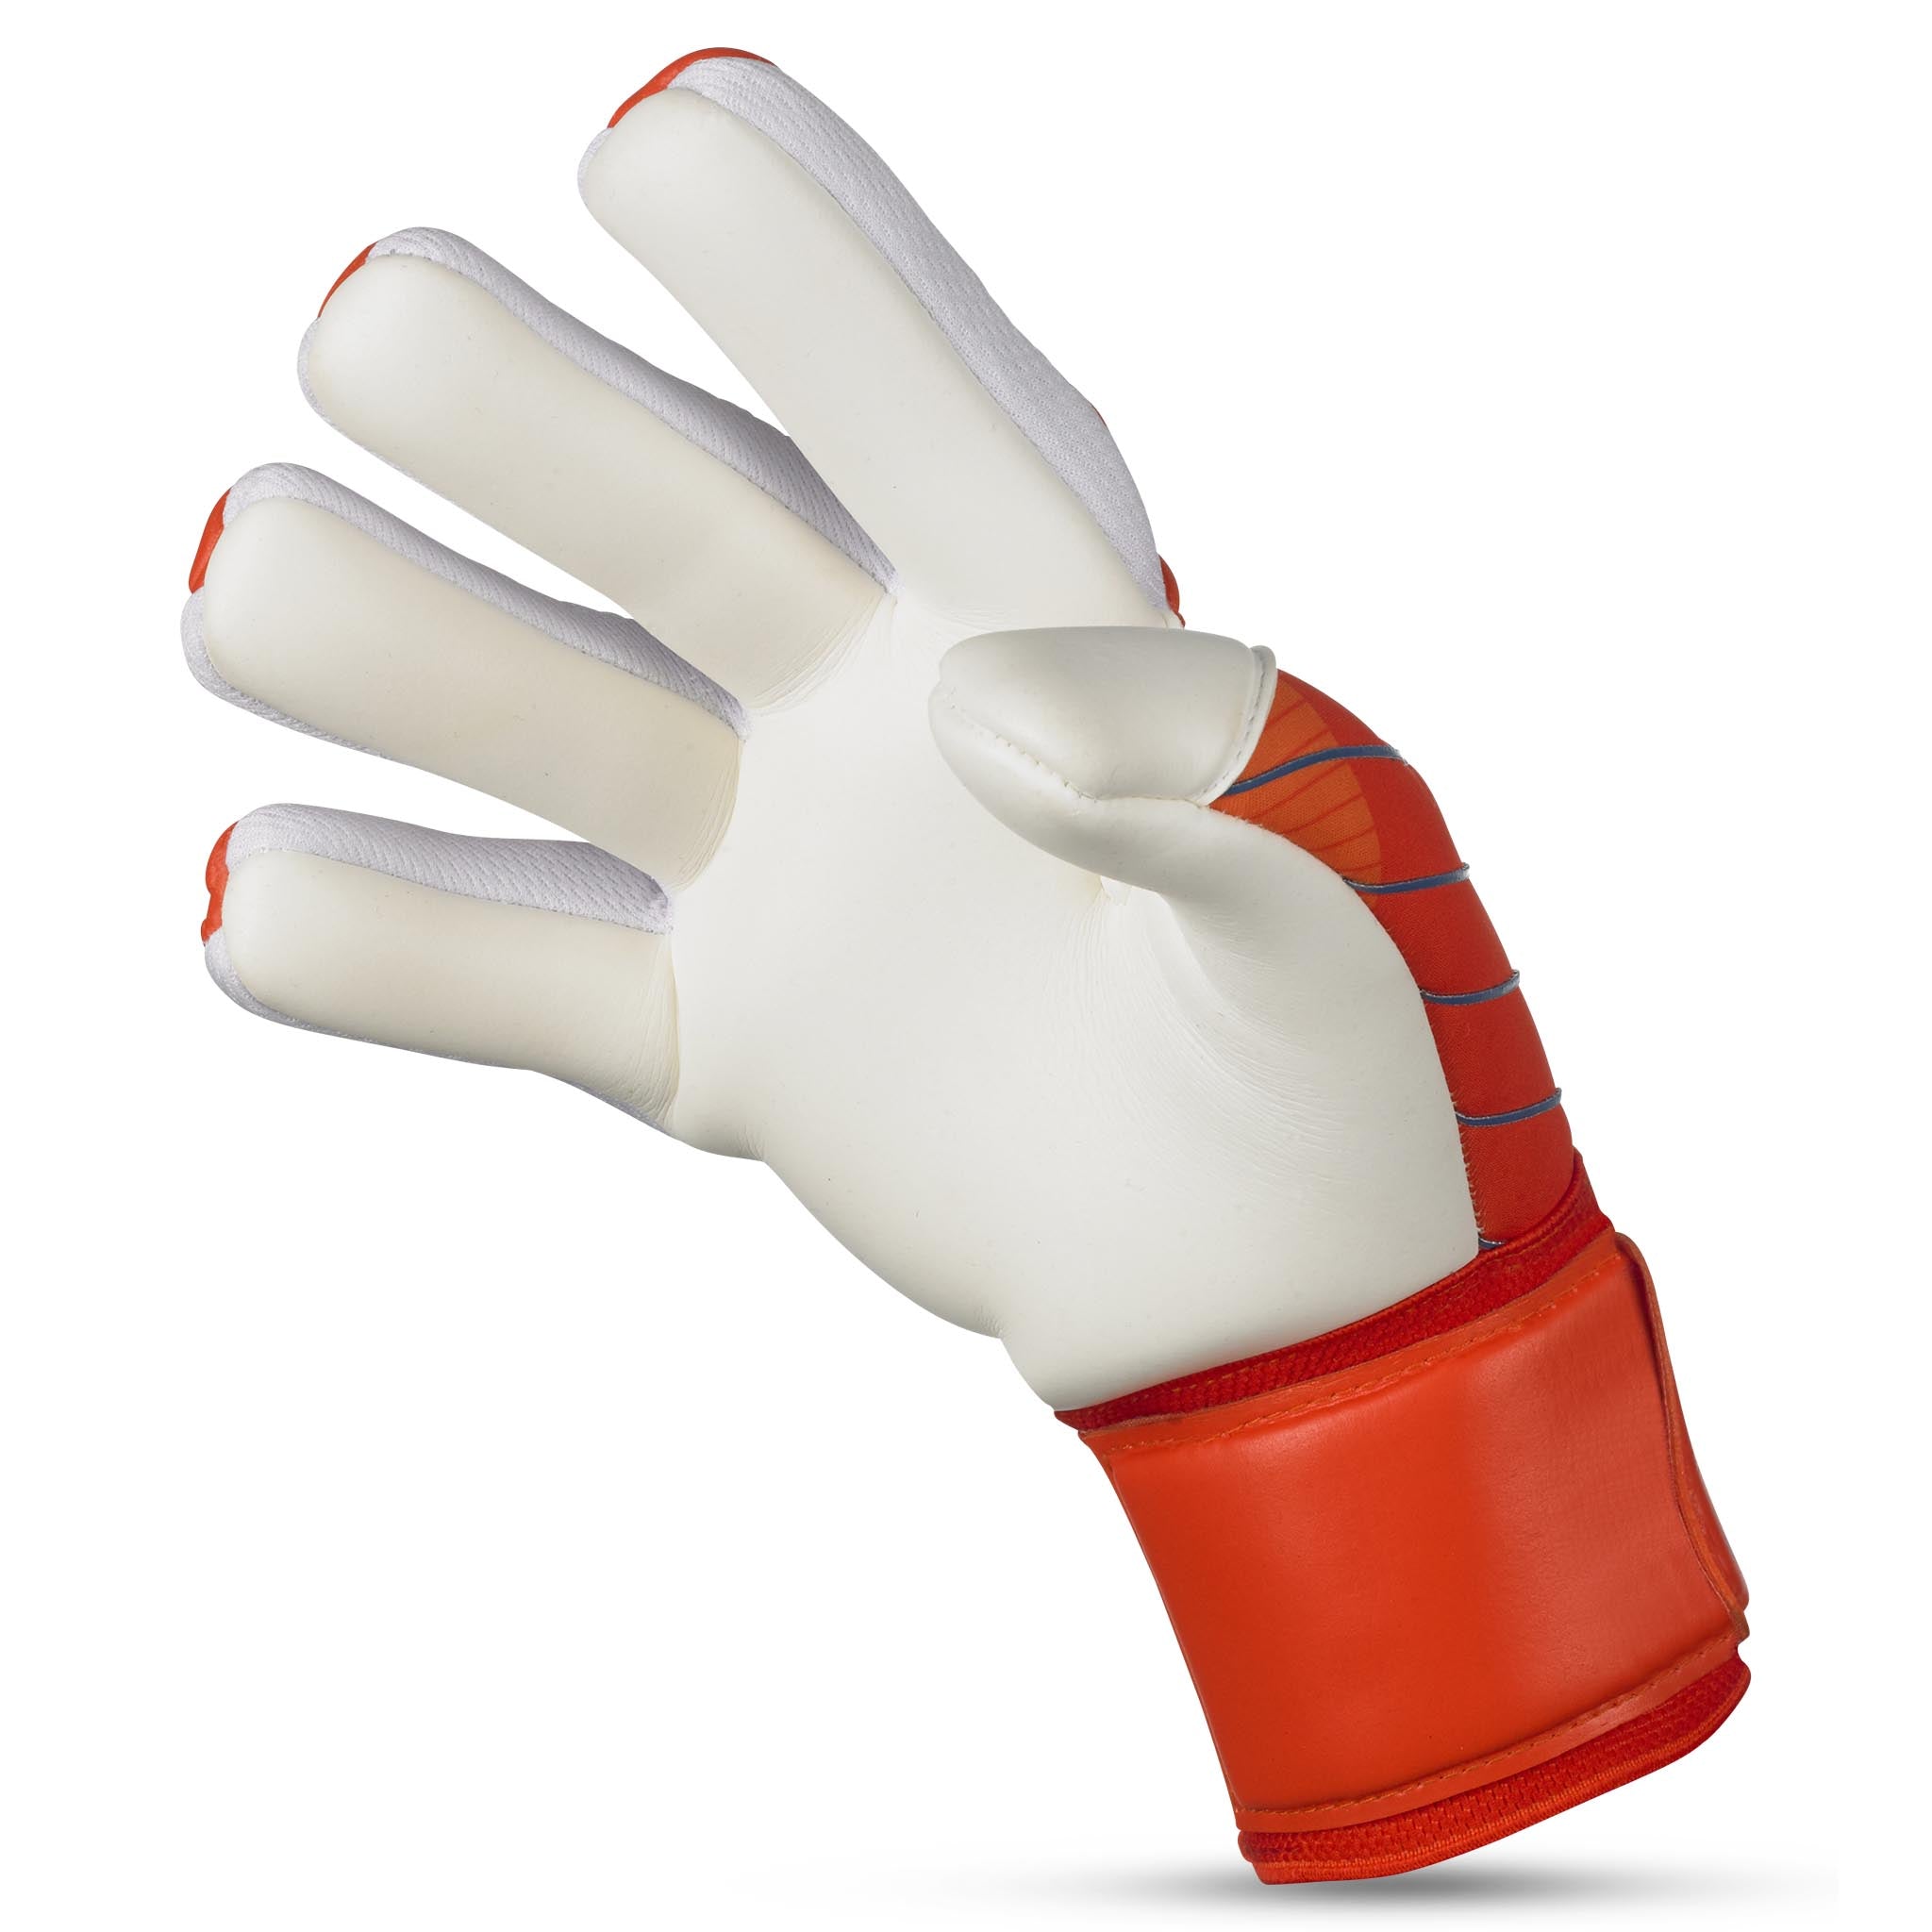 Målvakthandskar - 77 Super Grip #färg_orange/white